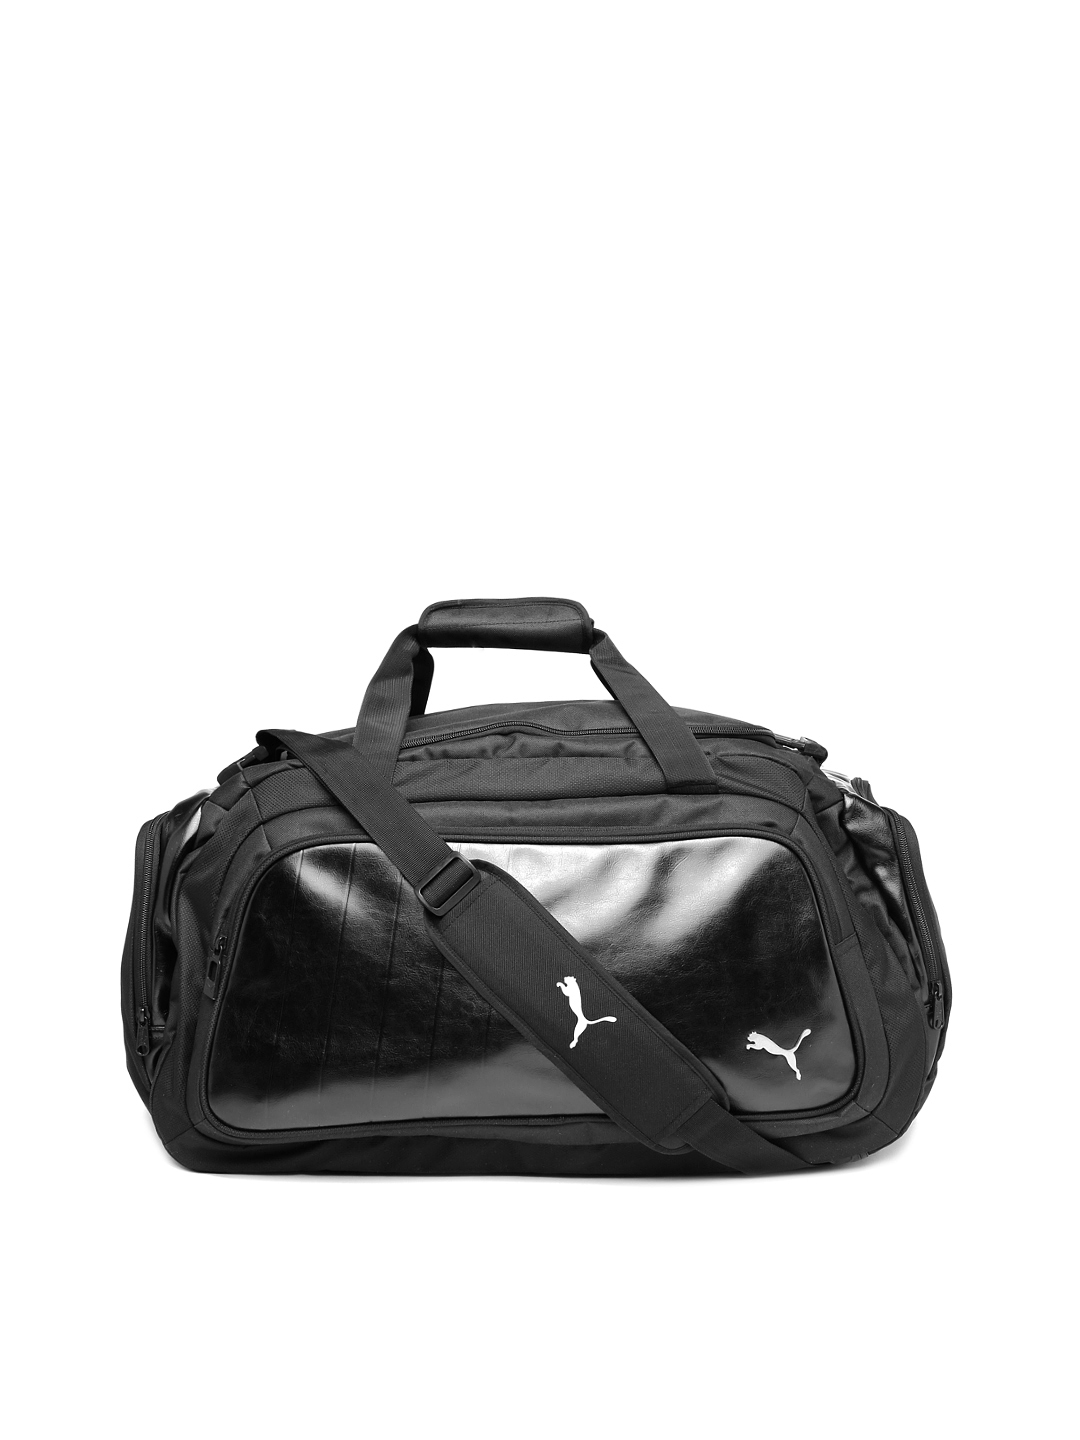 Buy PUMA Unisex Black Elite Duffle Bag 